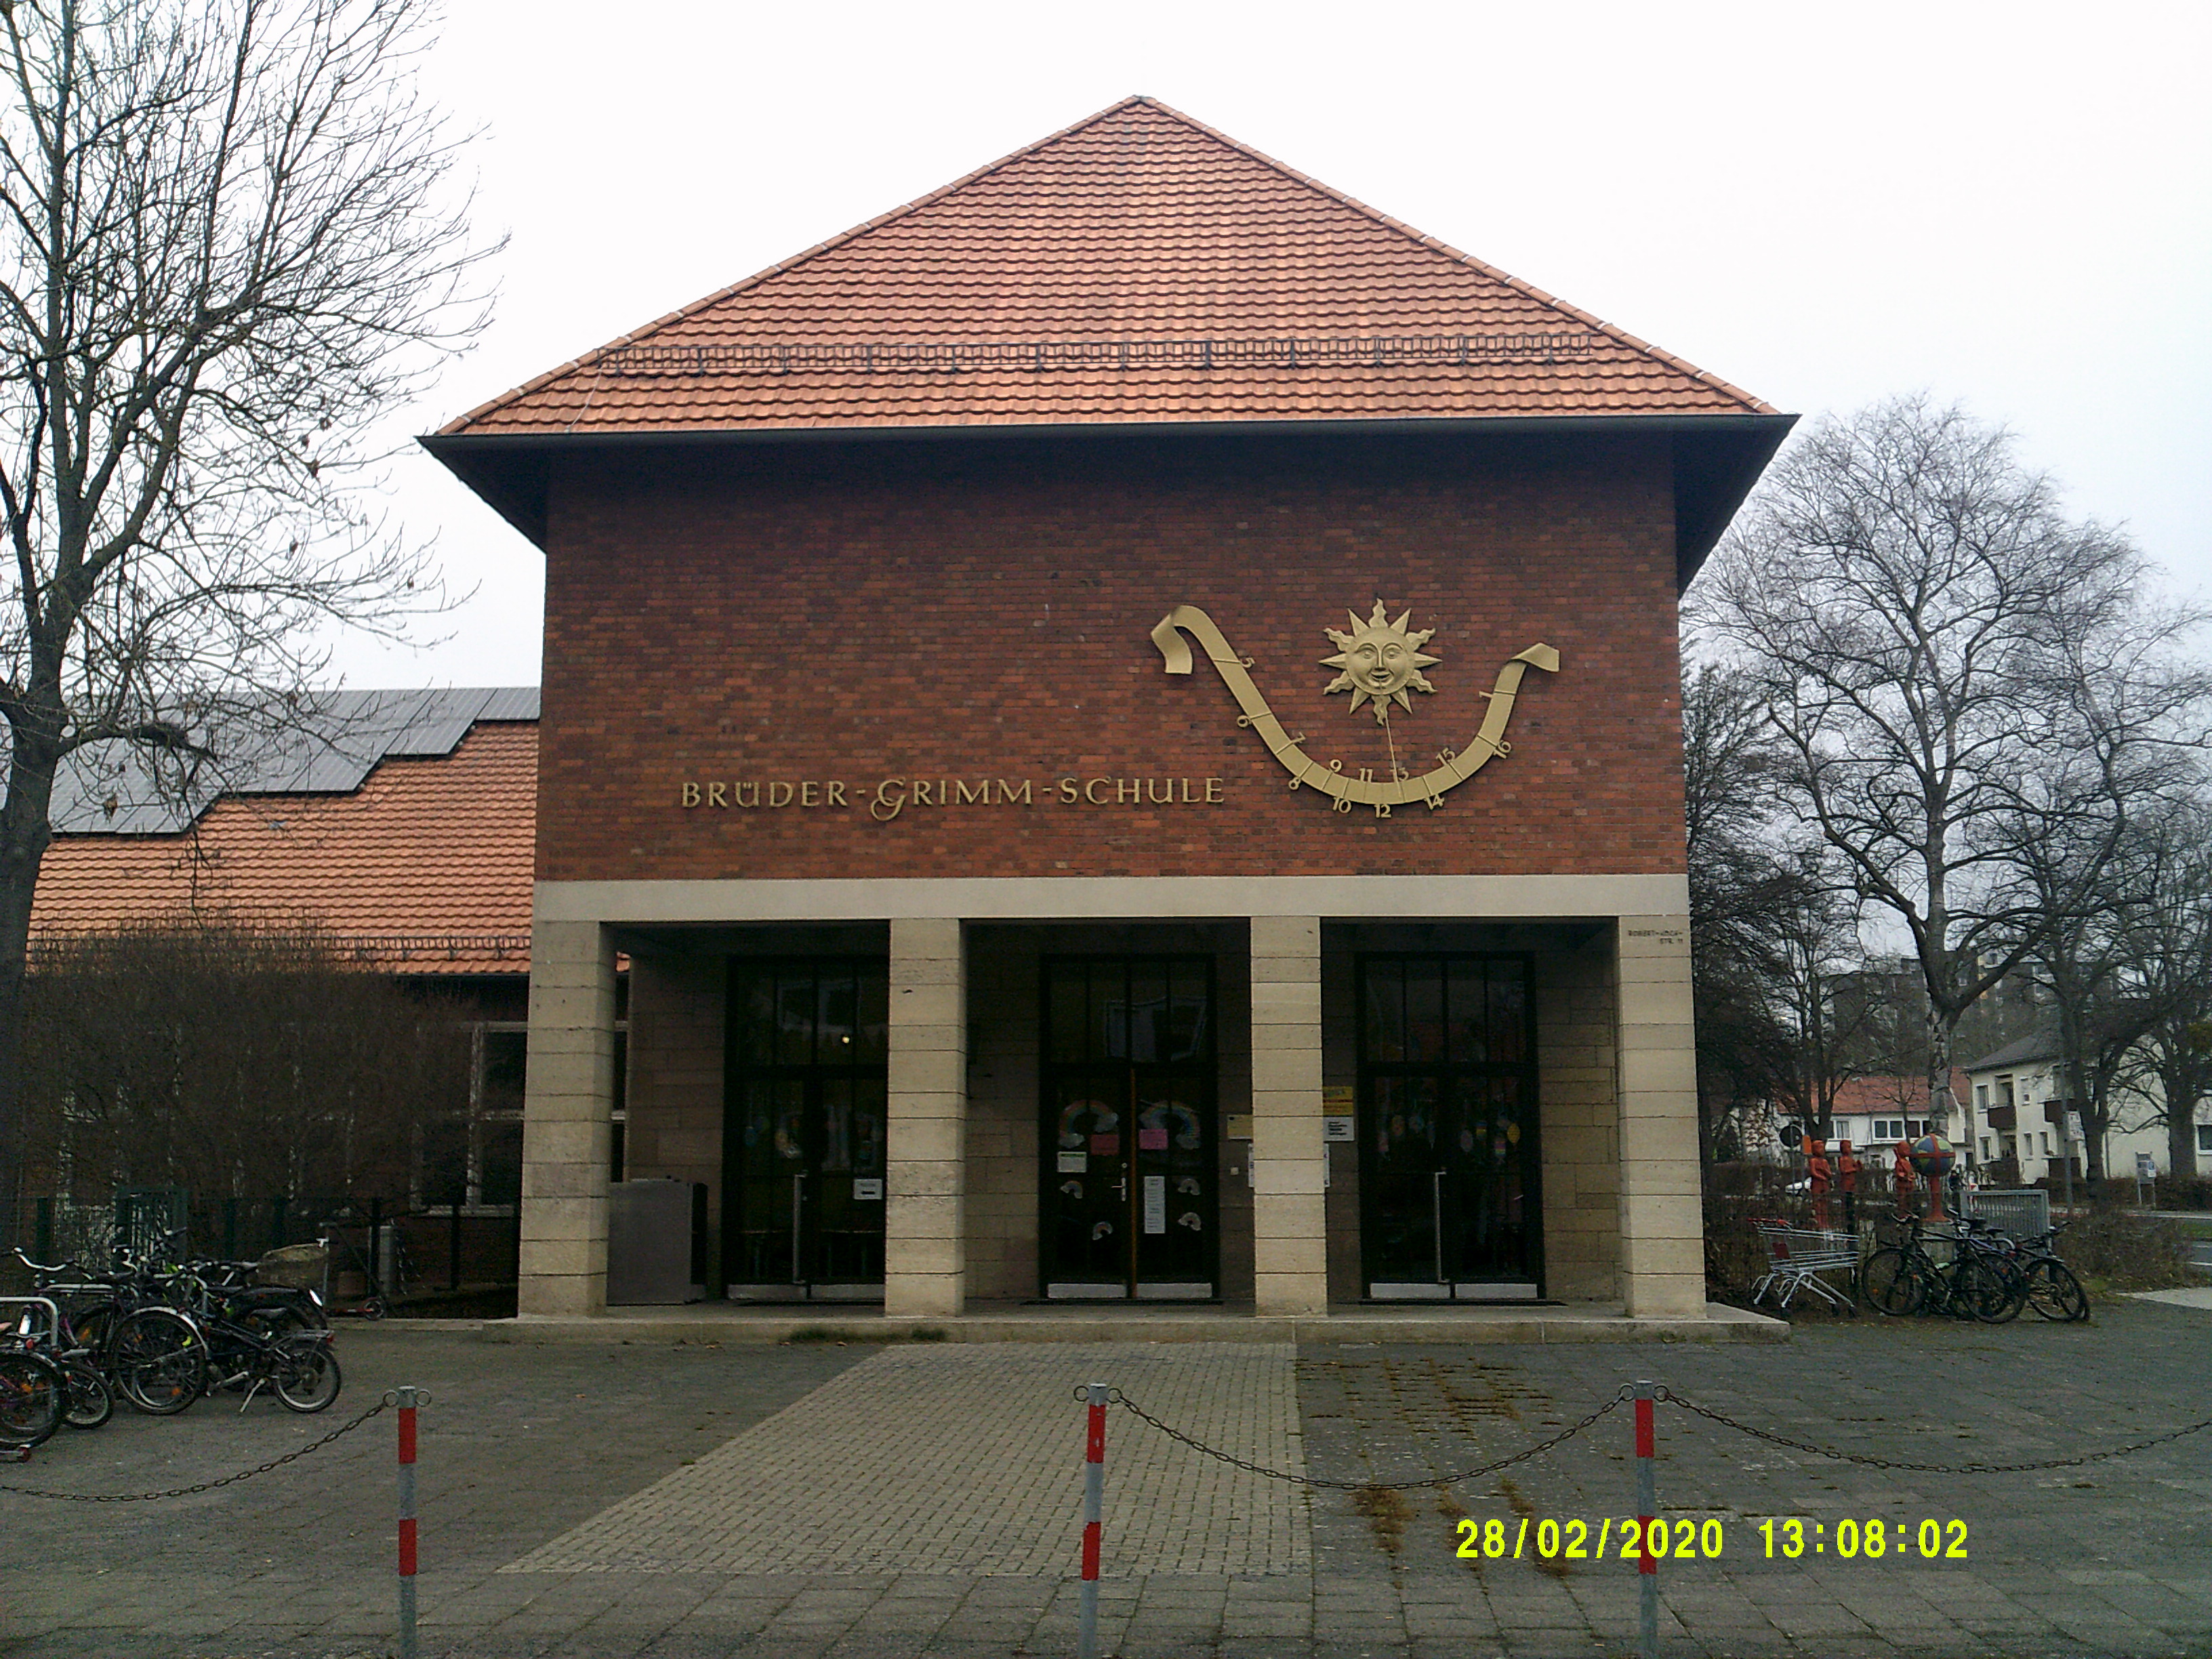 Brüder-Grimm-Schule, Göttingen, Germany 2